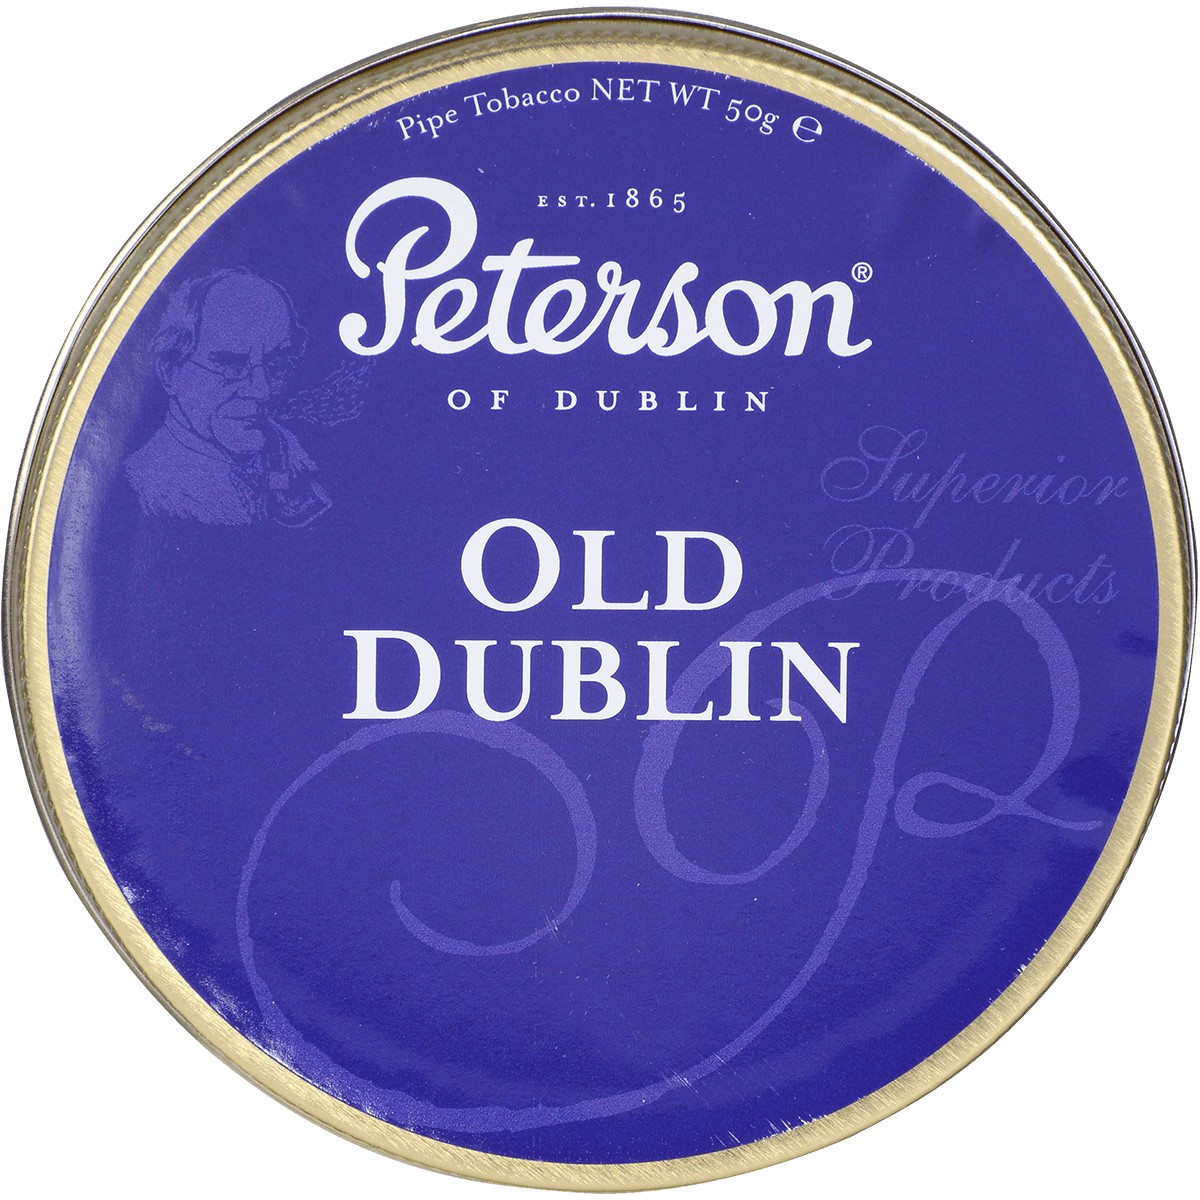 Peterson of Dublin Old Dublin 50 gram tin